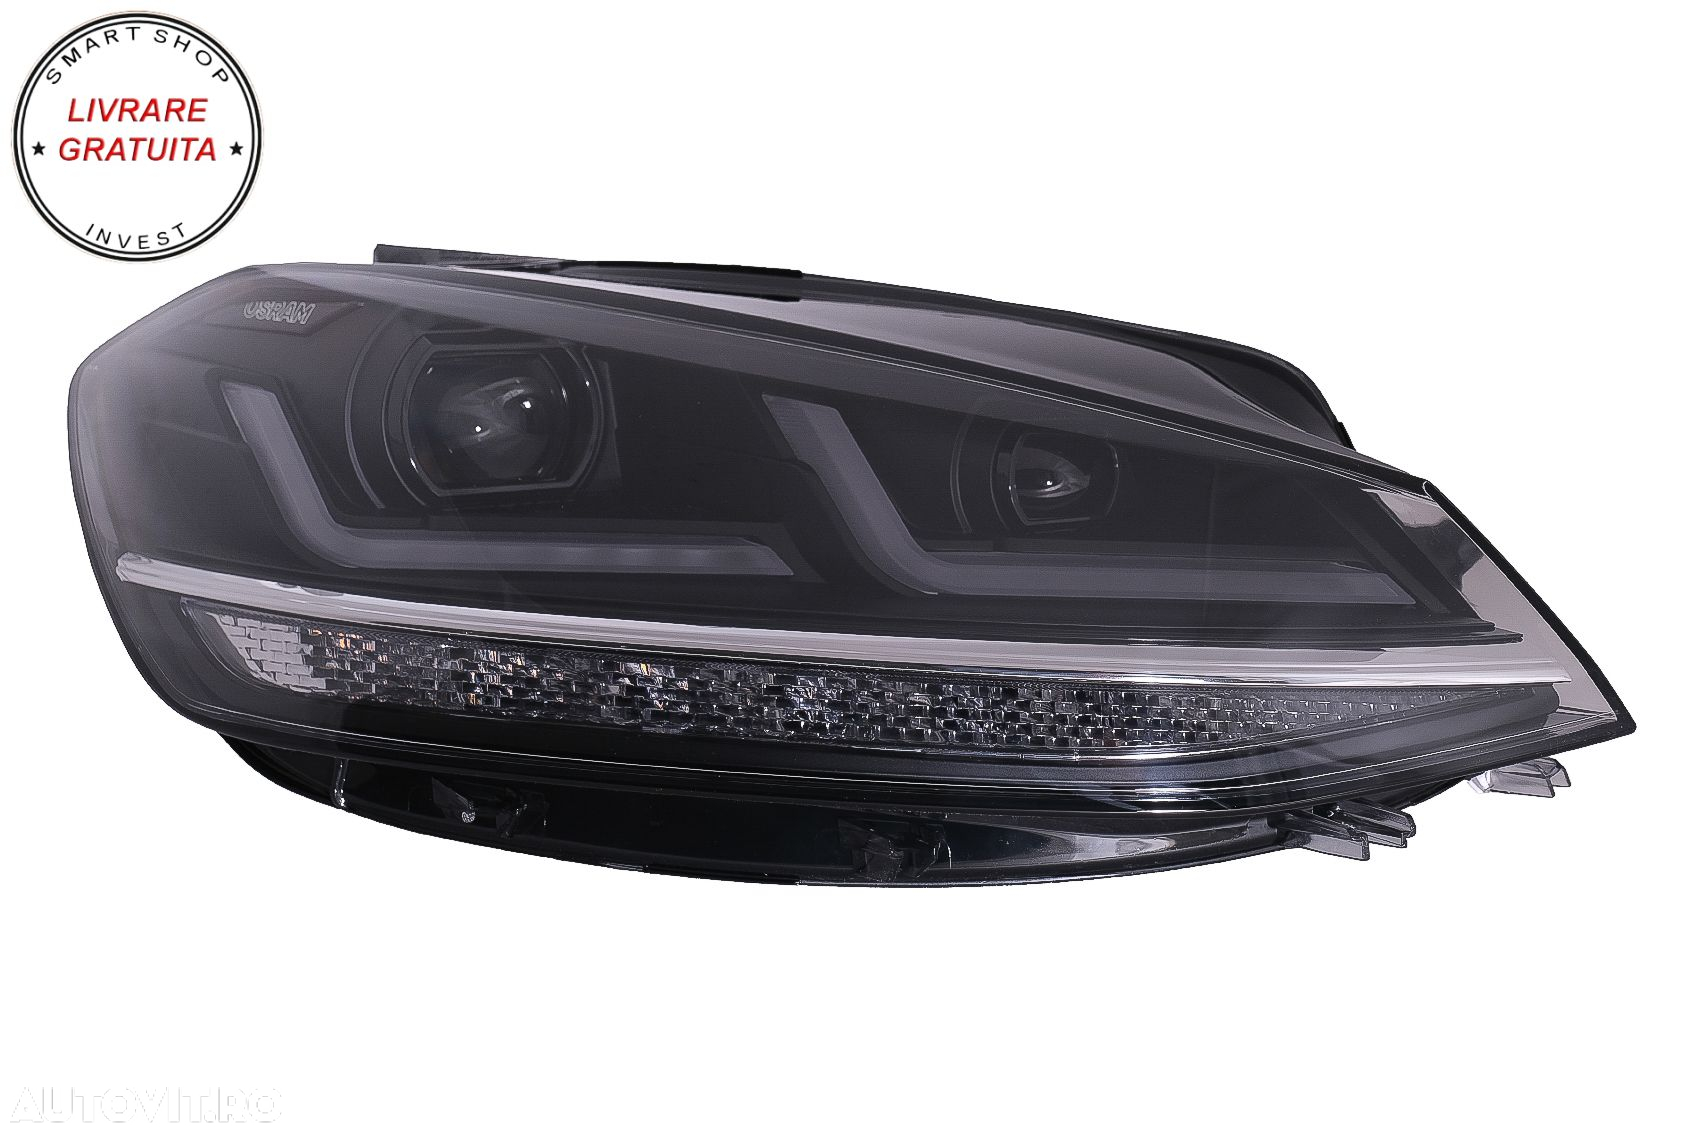 Faruri LEDriving Osram Full LED VW Golf 7.5 VII Facelift (2017-2020) pentru haloge- livrare gratuita - 2